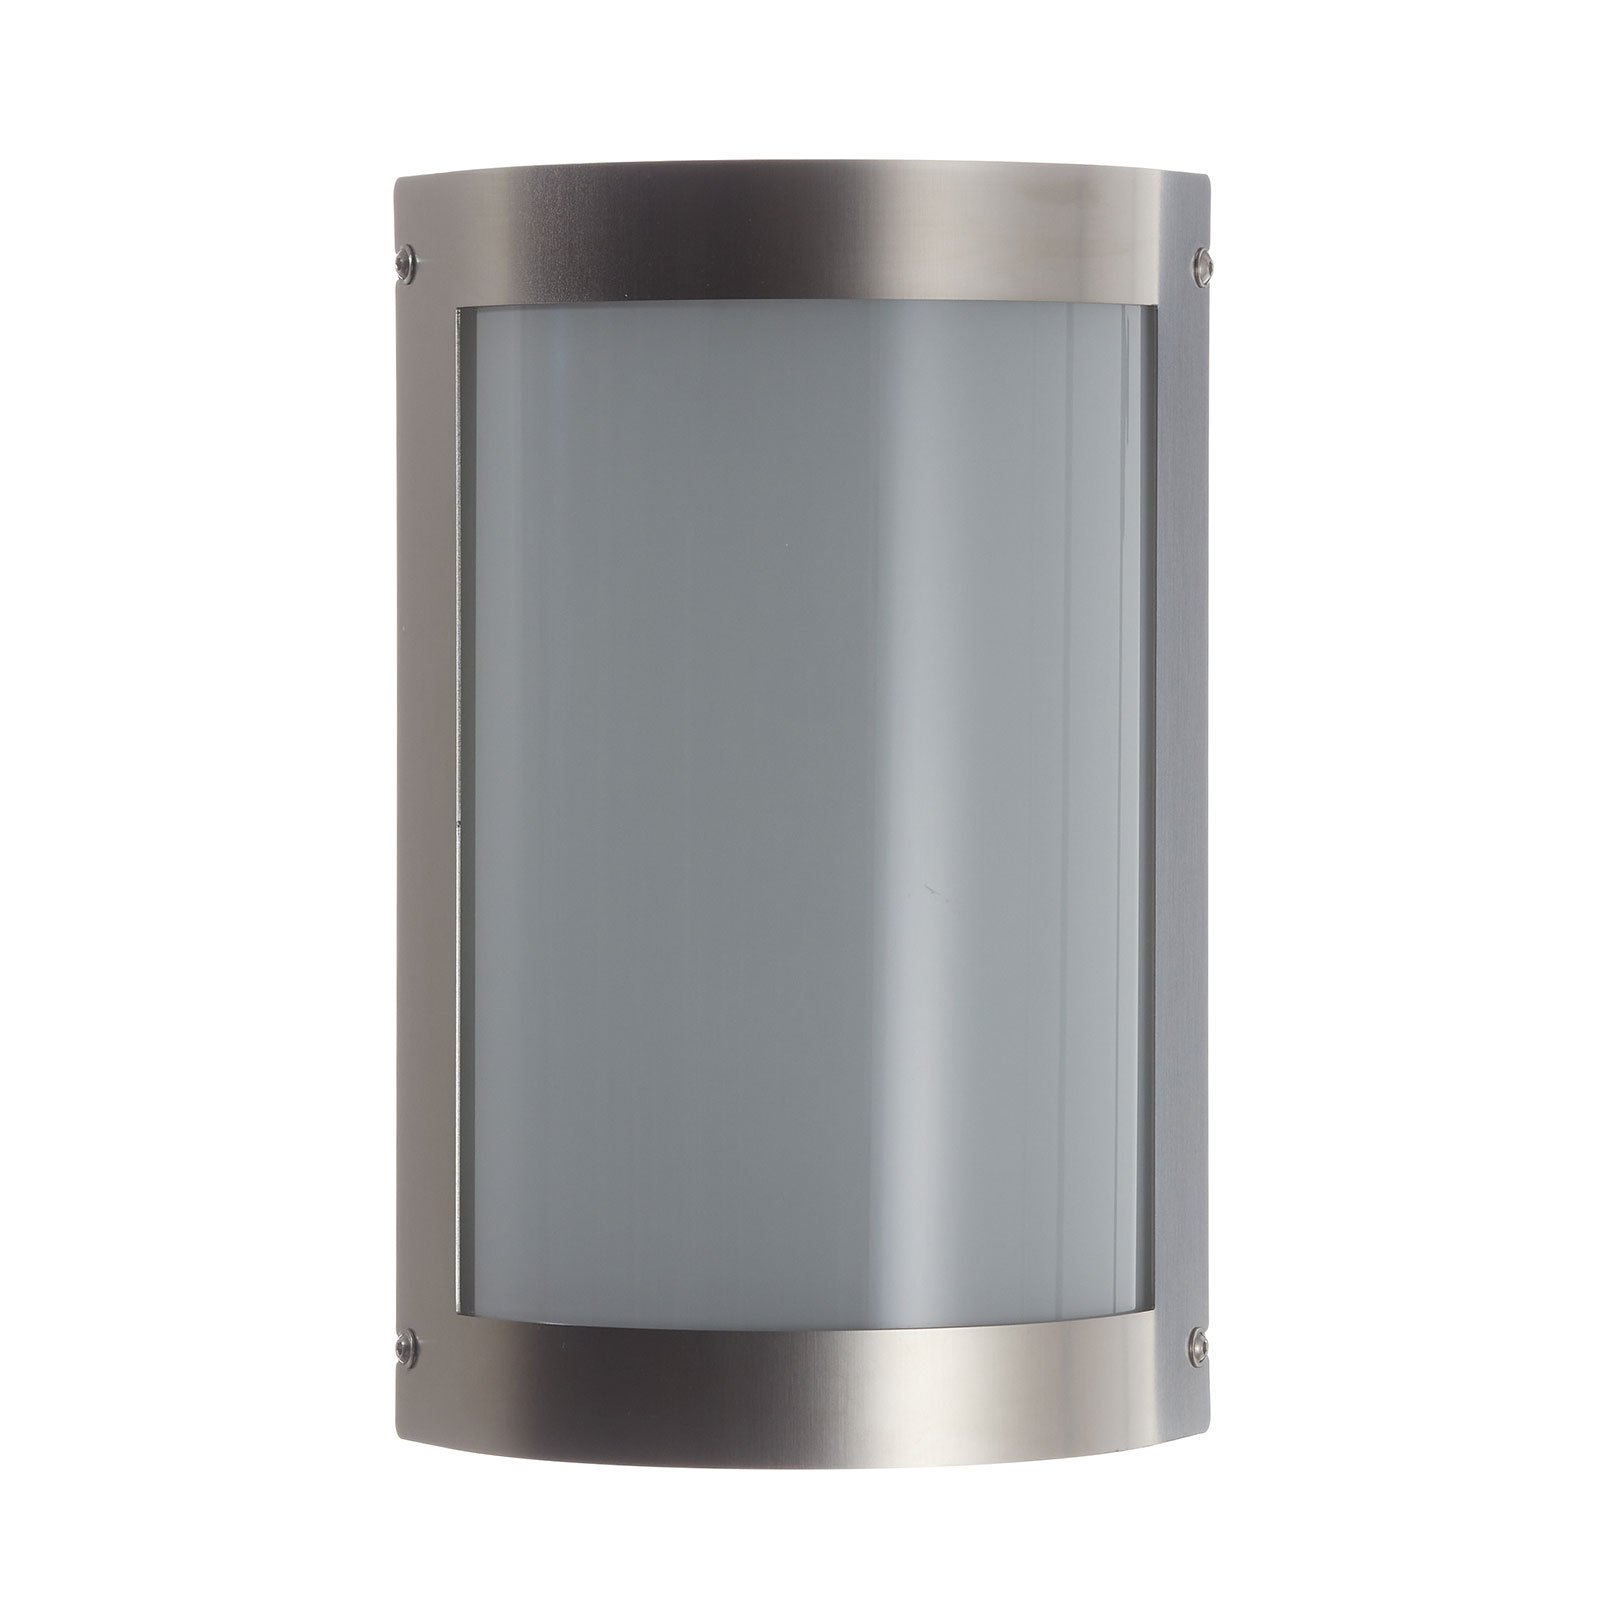 Sensor-LED-lampa Aqua Marco, rostfritt stål